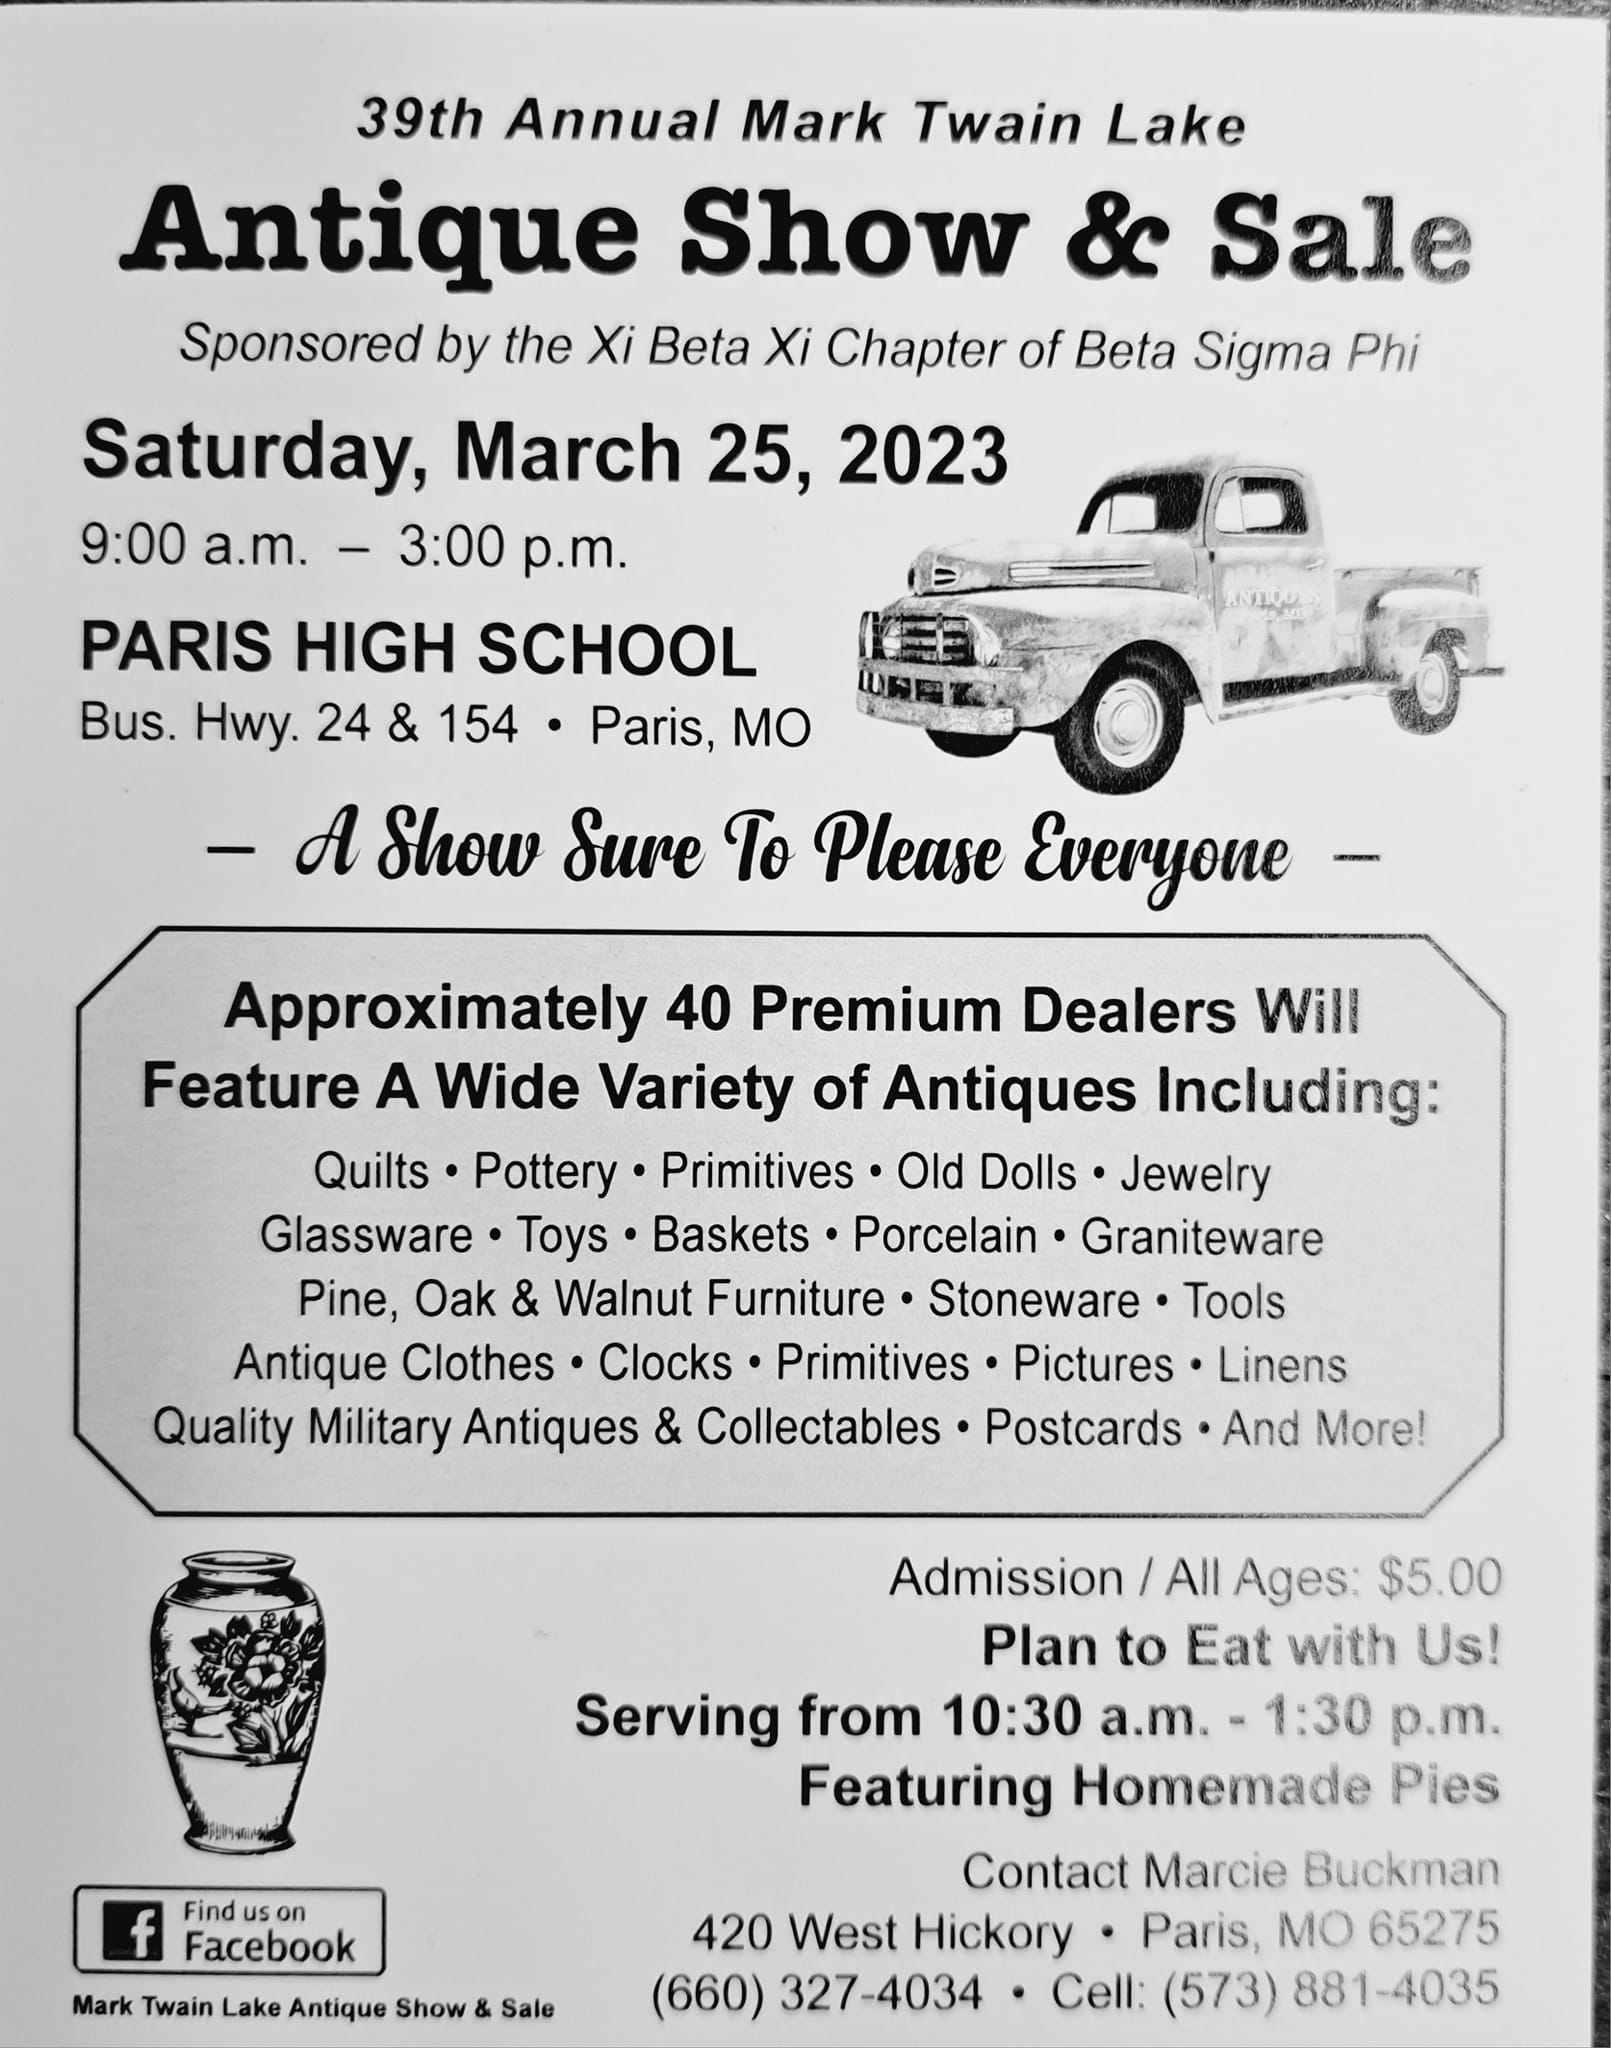 Mark Twain Lake Antique Show & Sale